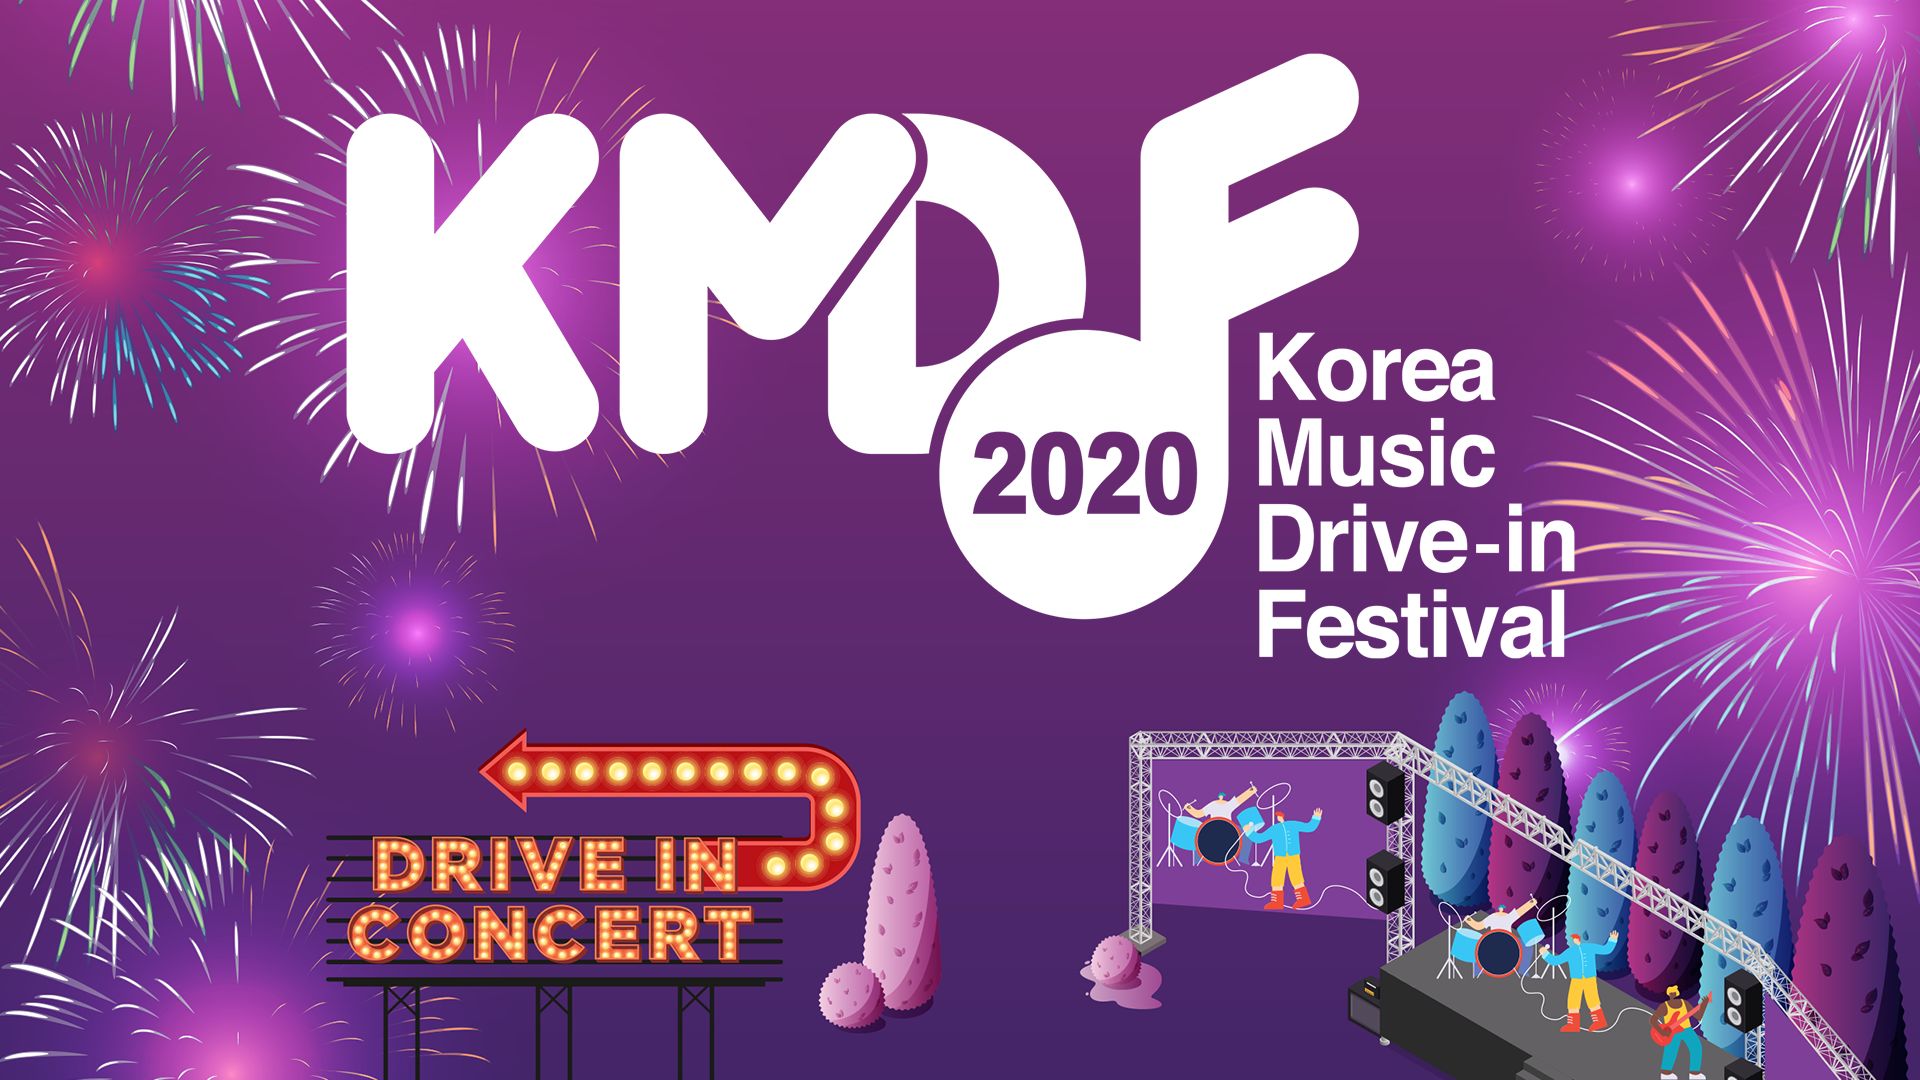 2020 Korea Music Drive-in Festival